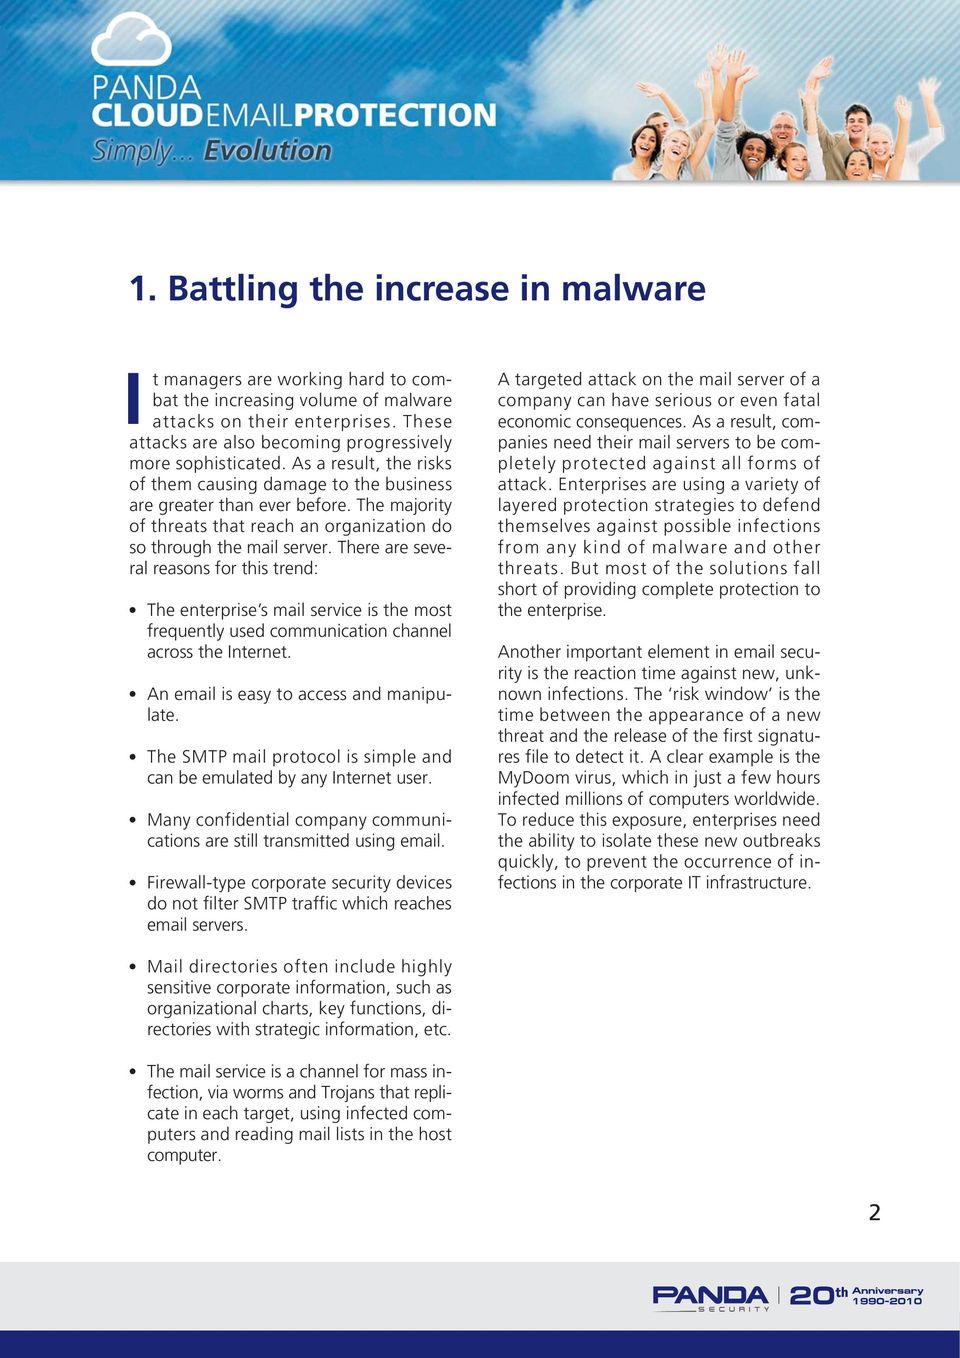 The majority of threats that reach an organization do so through the mail server.